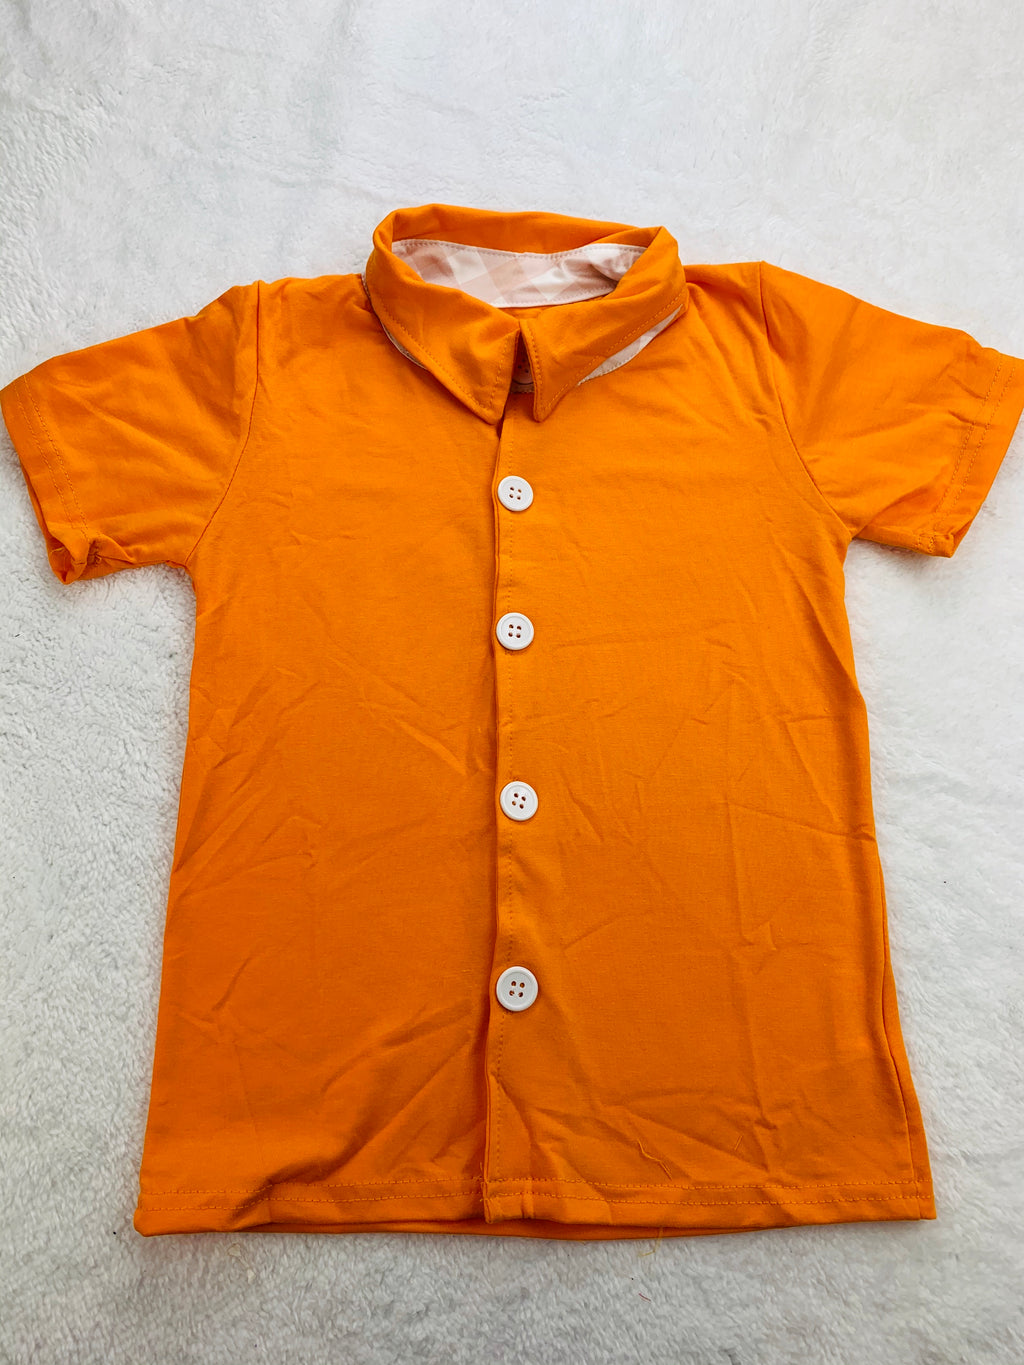 Autumn Harvest Orange Shirt LAST ONE!